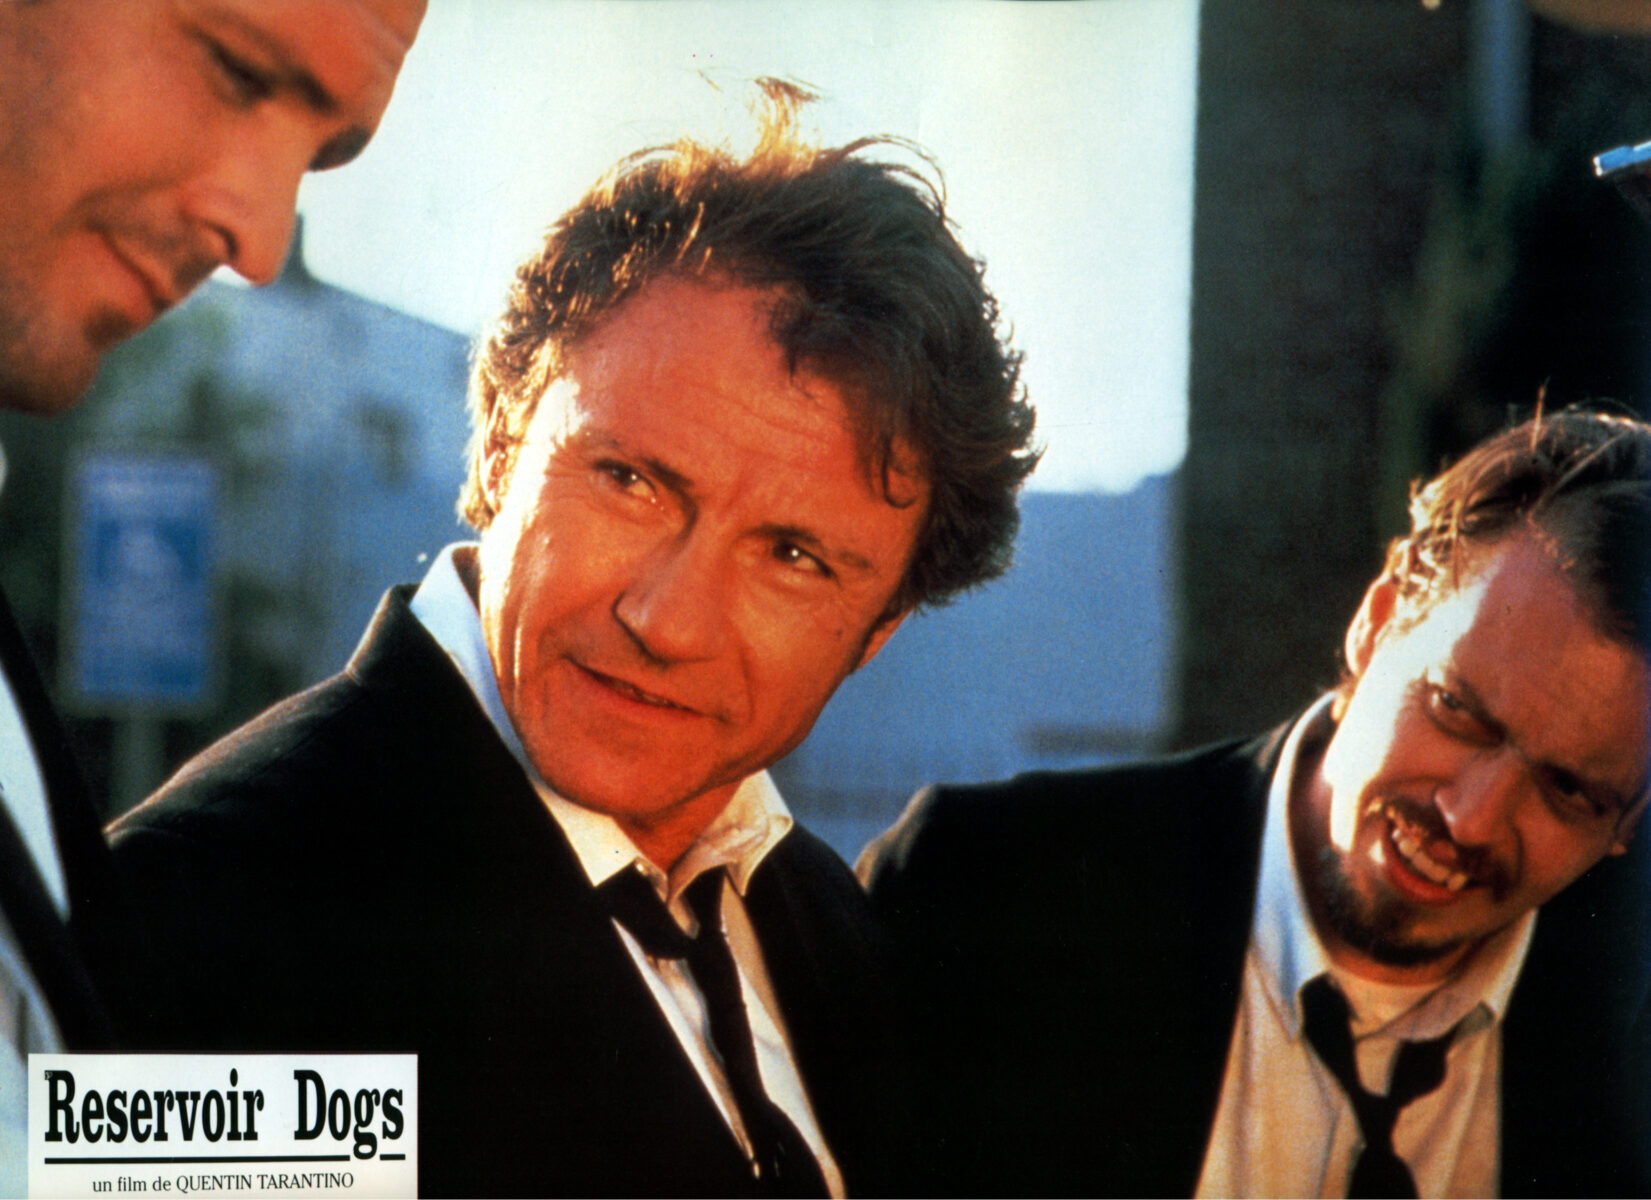 Reservoir dogs 4 Tarantino